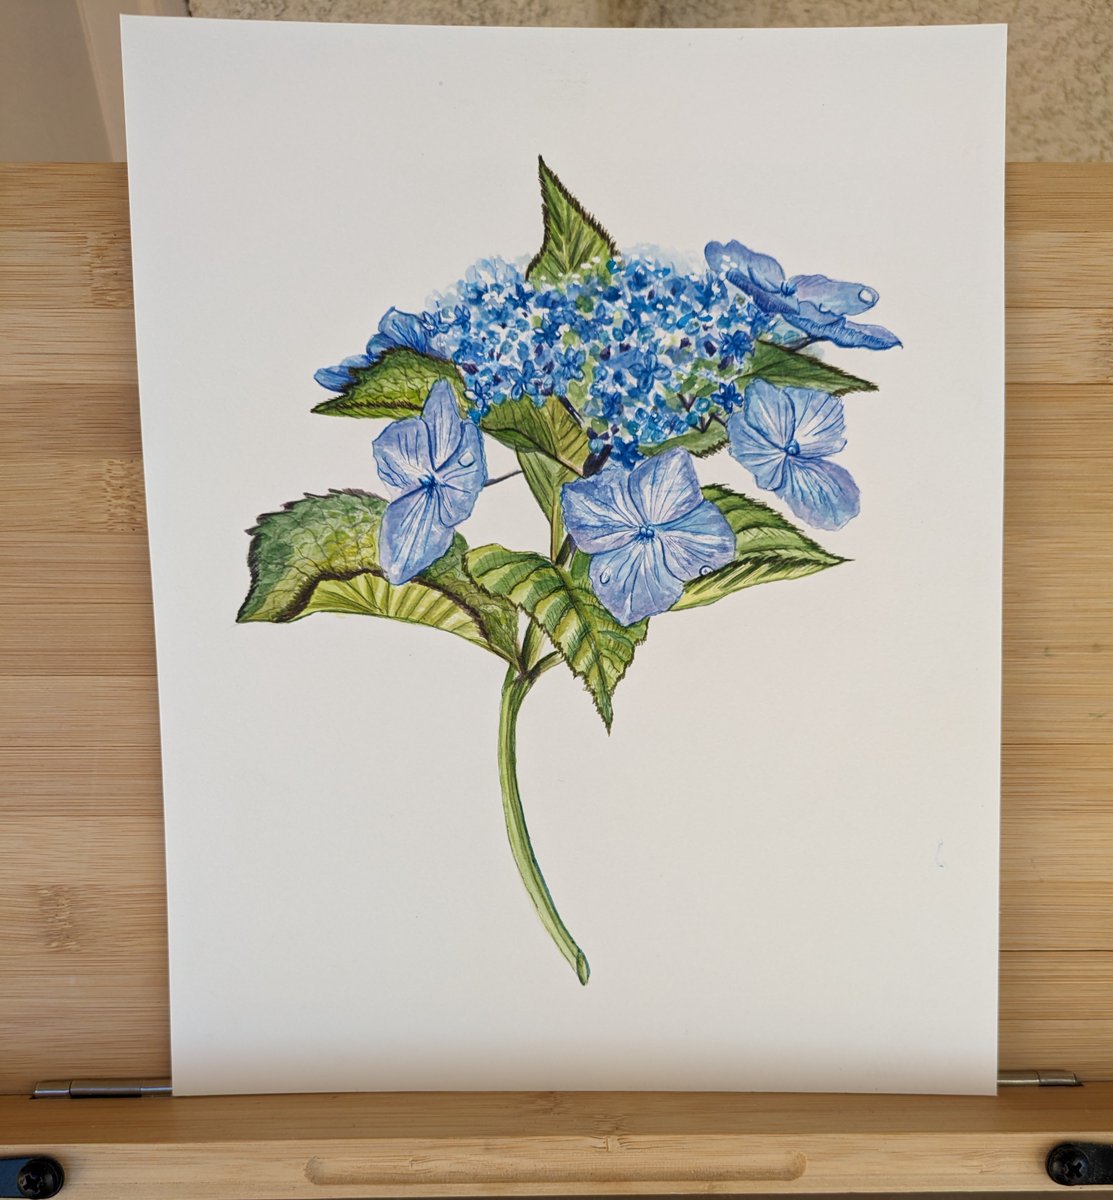 Just finished a Hydrangea Serrata, Botanical Illustration in watercolor.

#thursdayvibes #art #watercolor #flowers #MothersDayGifts #spring #botanicalgarden #botanical #gardens #floral